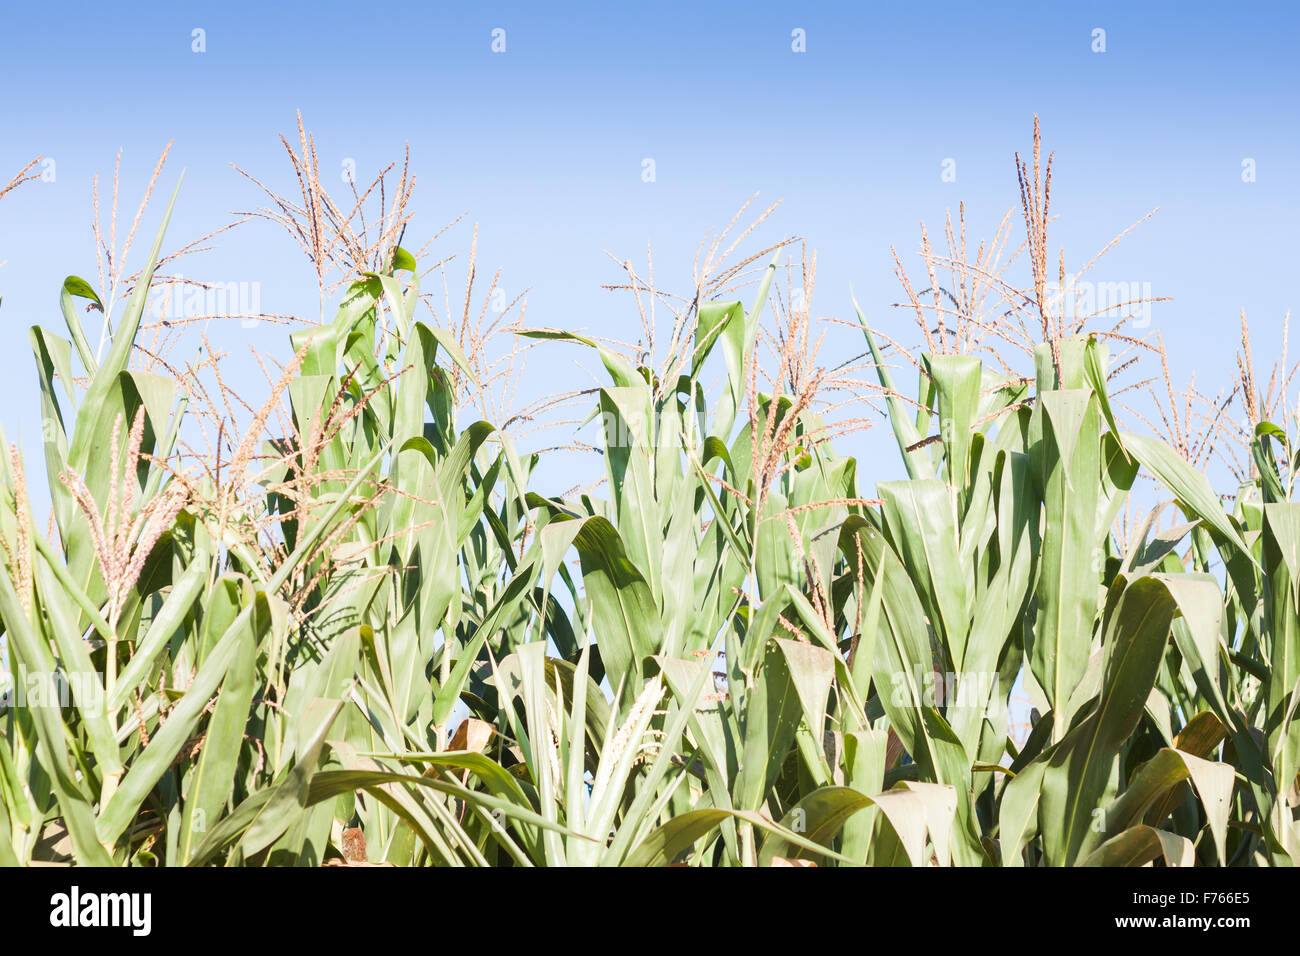 Campo de maíz verde creciendo, Stock Photo Foto de stock